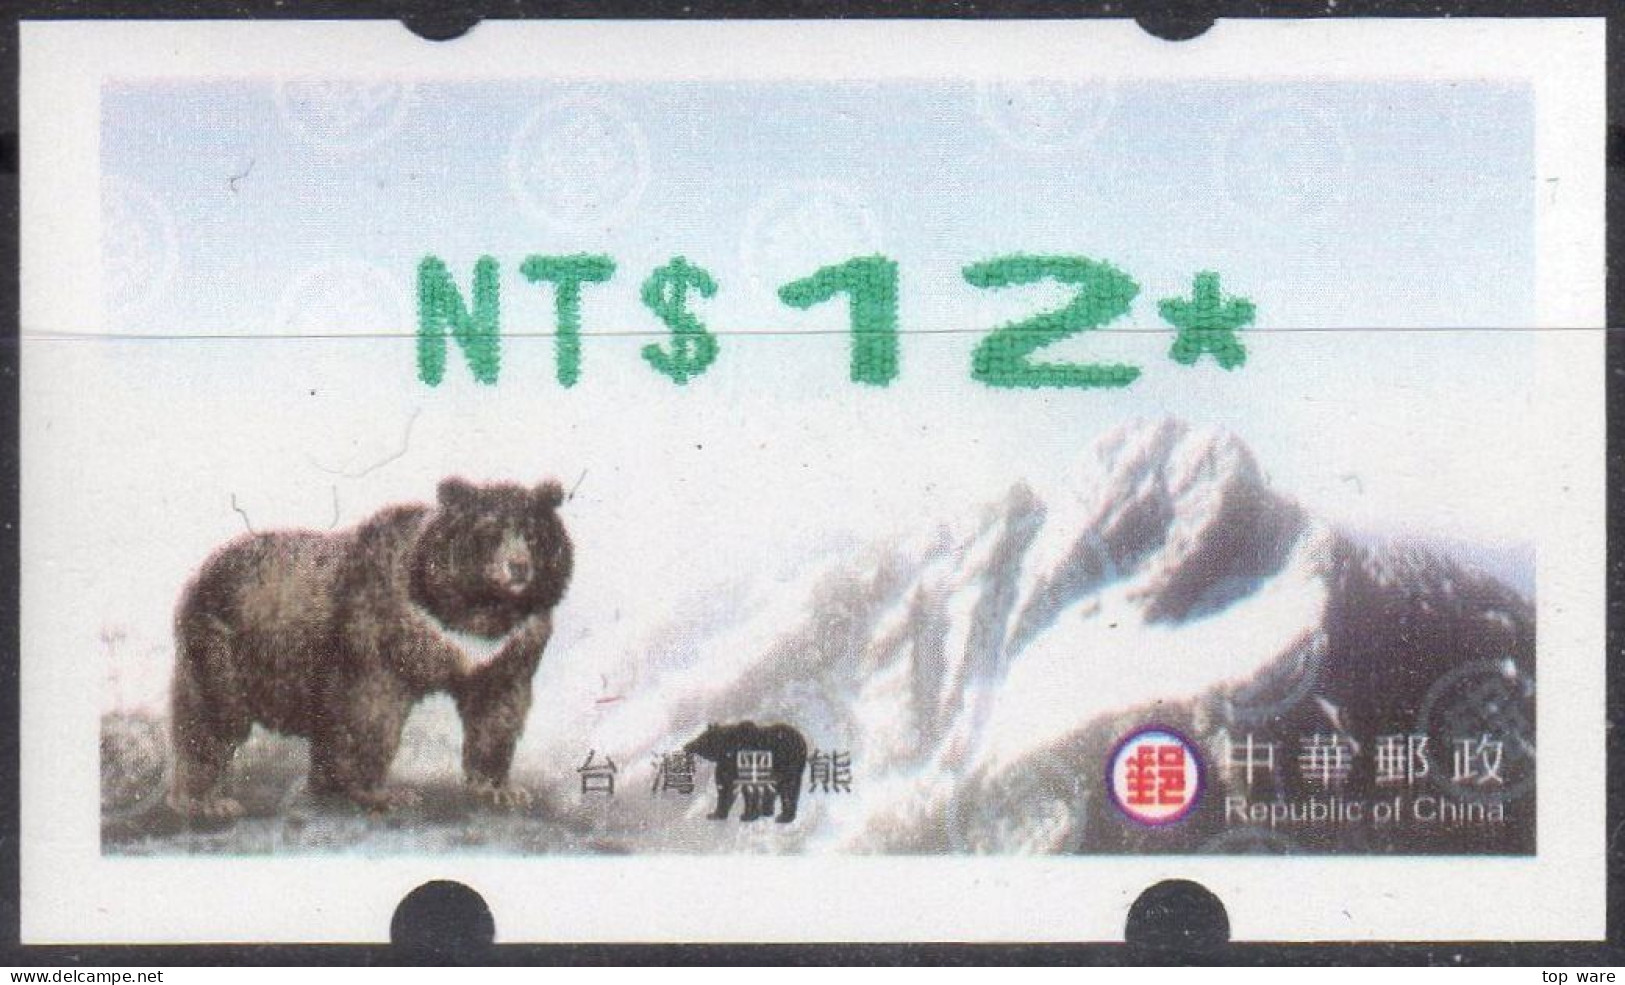 2004 Automatenmarken China Taiwan Black Bear MiNr.5.1 Green ATM NT$12 MNH Nagler Kiosk Etiquetas - Automaten